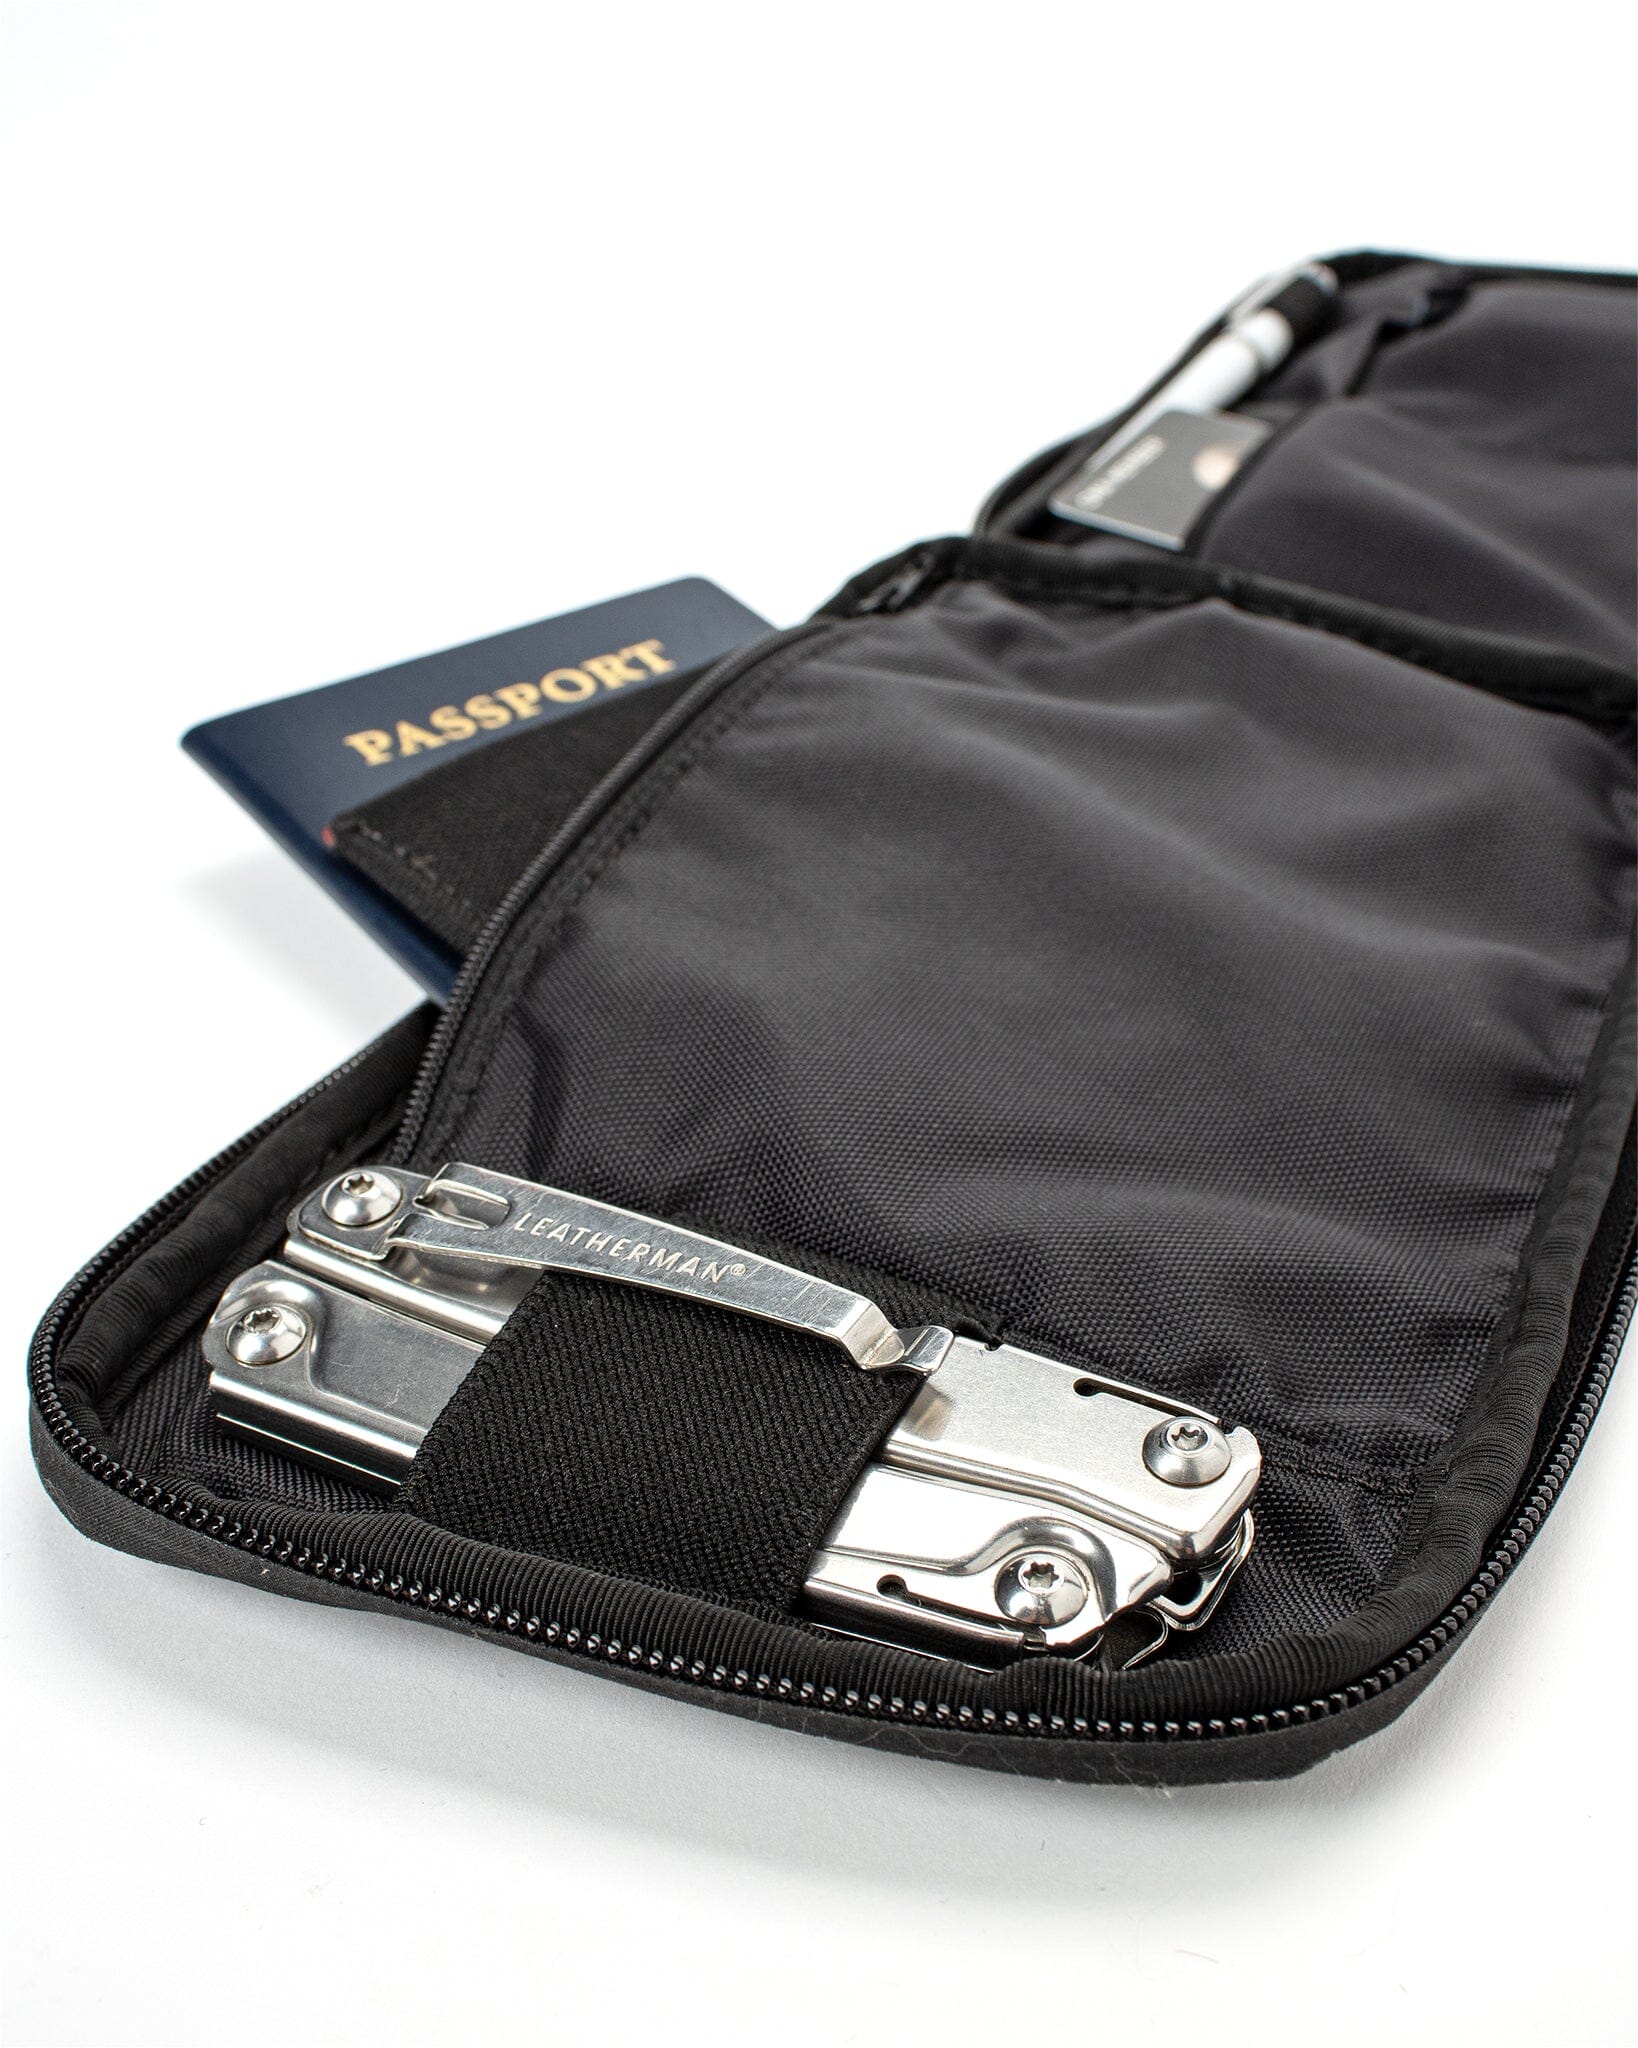 AUX™ Pocket - Stealth Ballistic Bag bolstr   